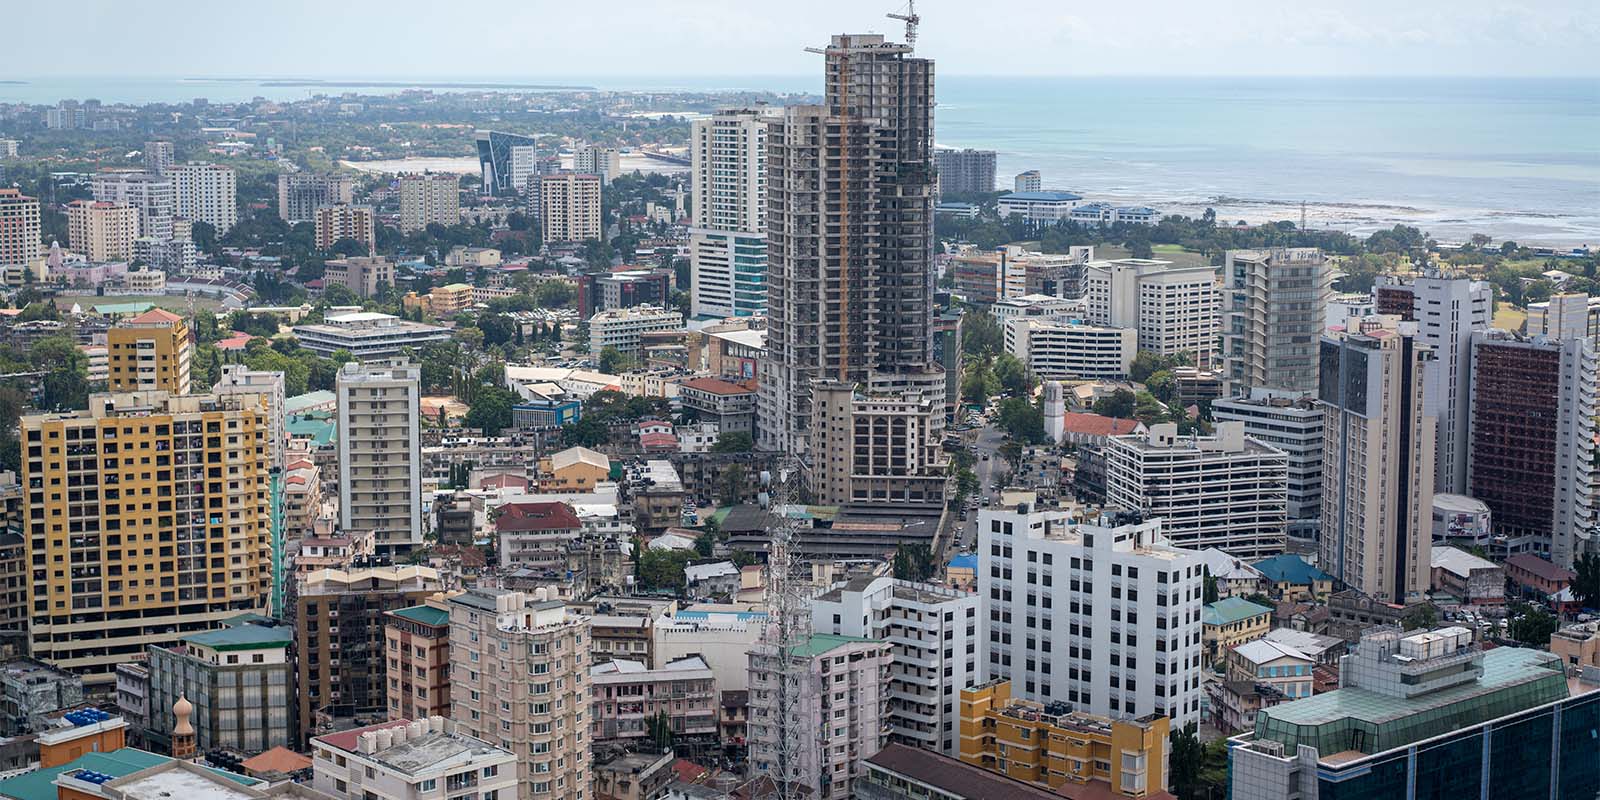 Aerial view of Dar Es Salaam - Capital of Tanzania